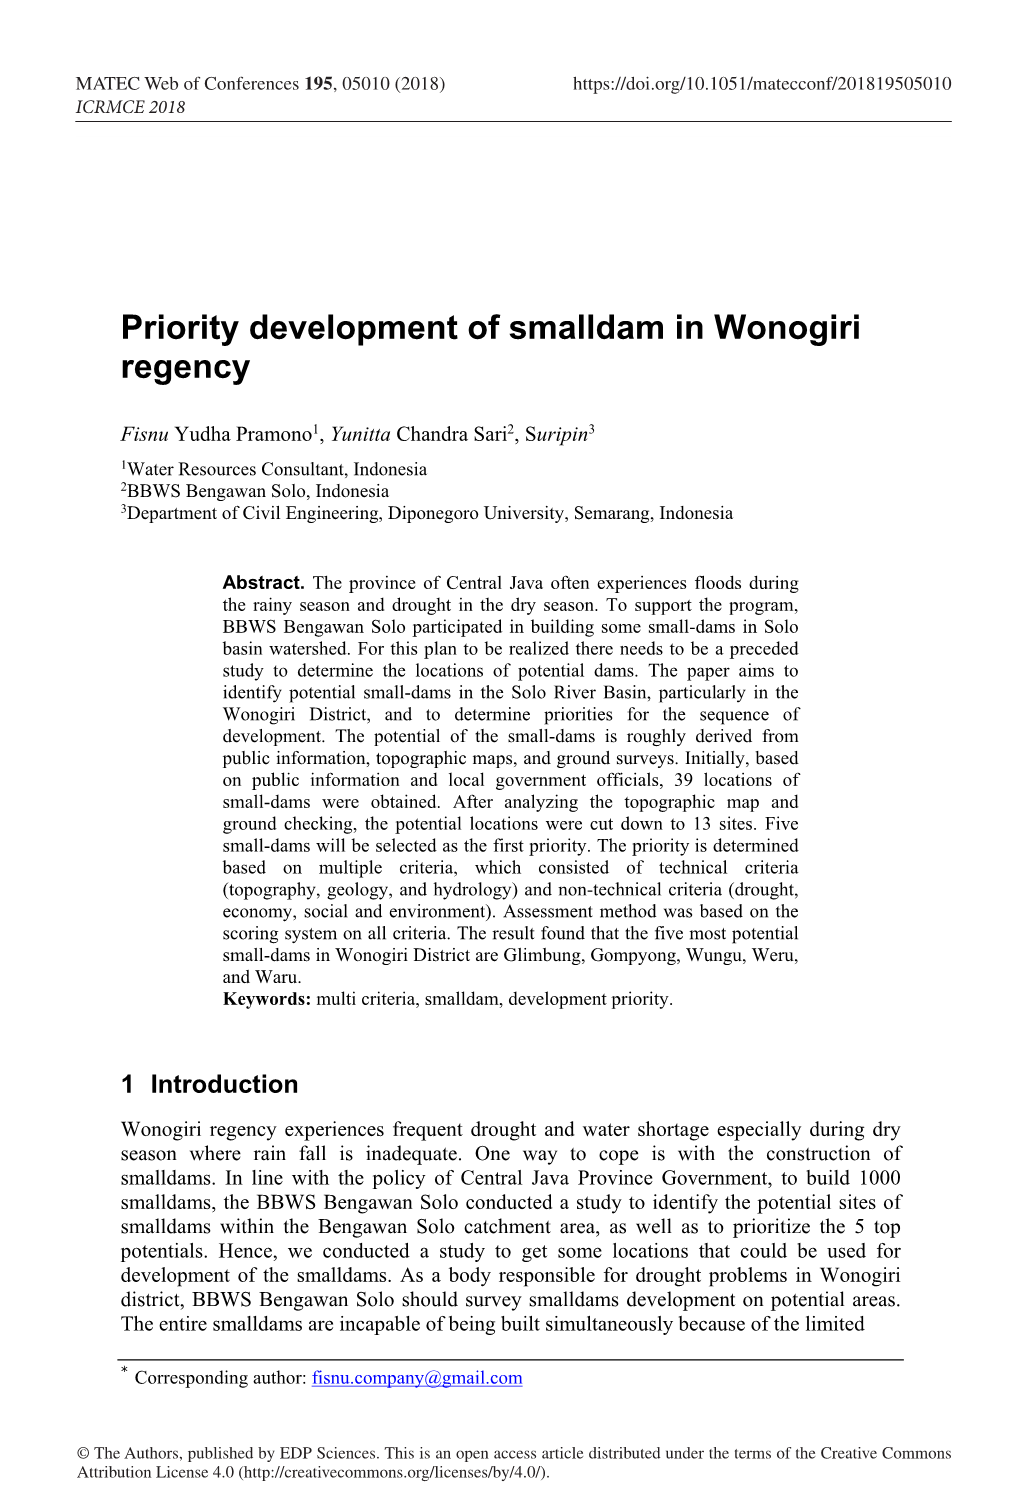 Priority Development of Smalldam in Wonogiri Regency